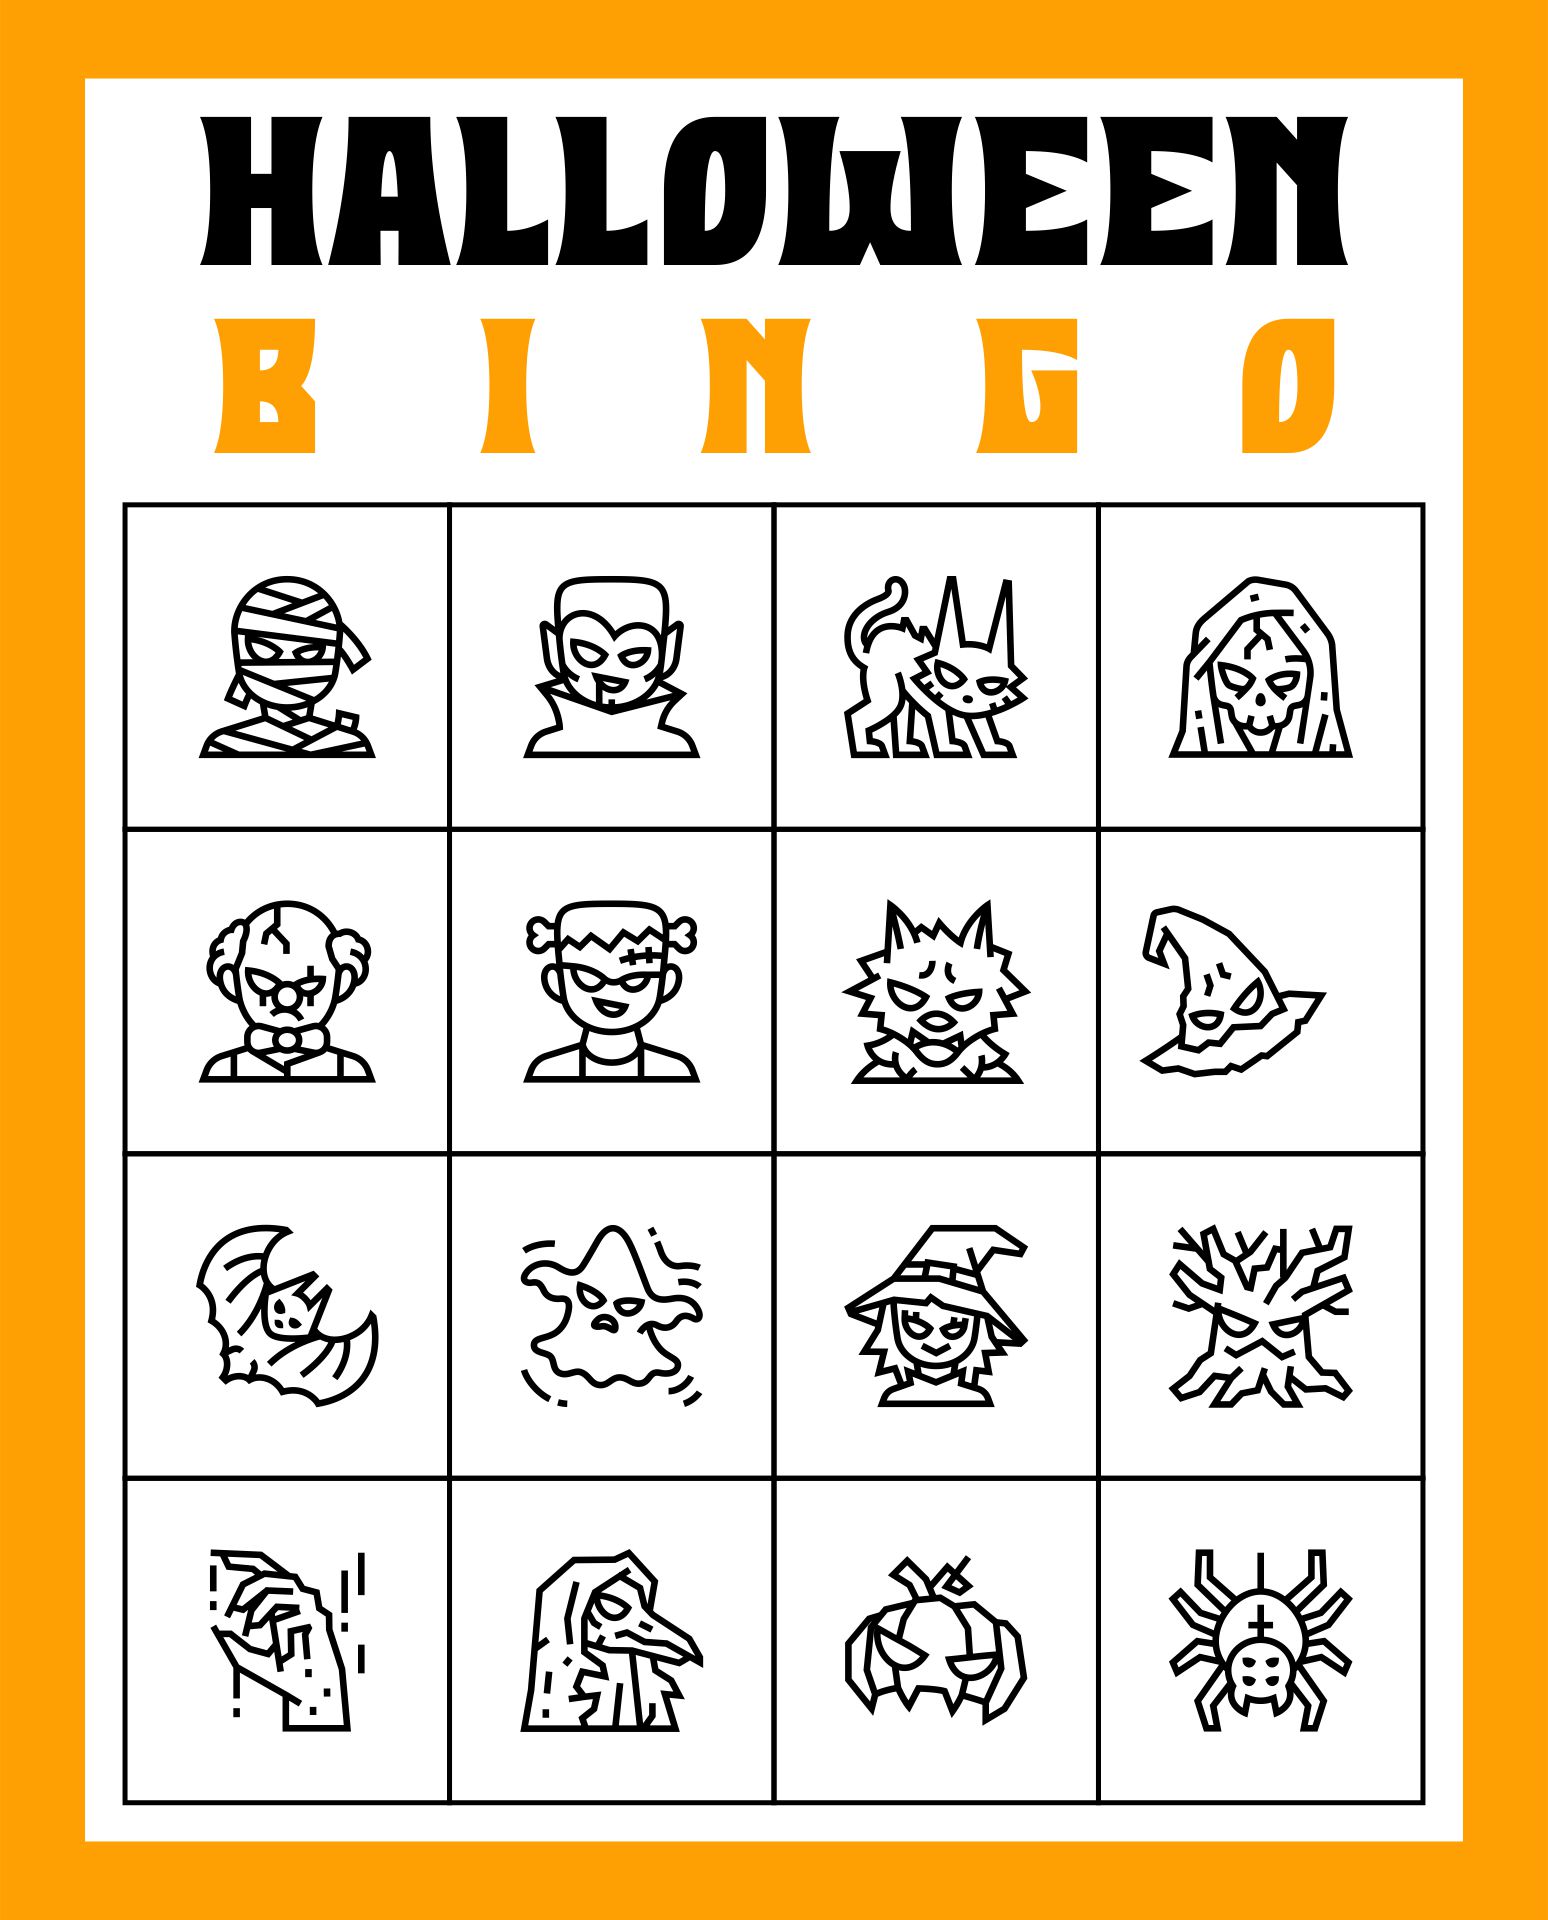 Printable Fun Halloween Party Games Ideas For Kids